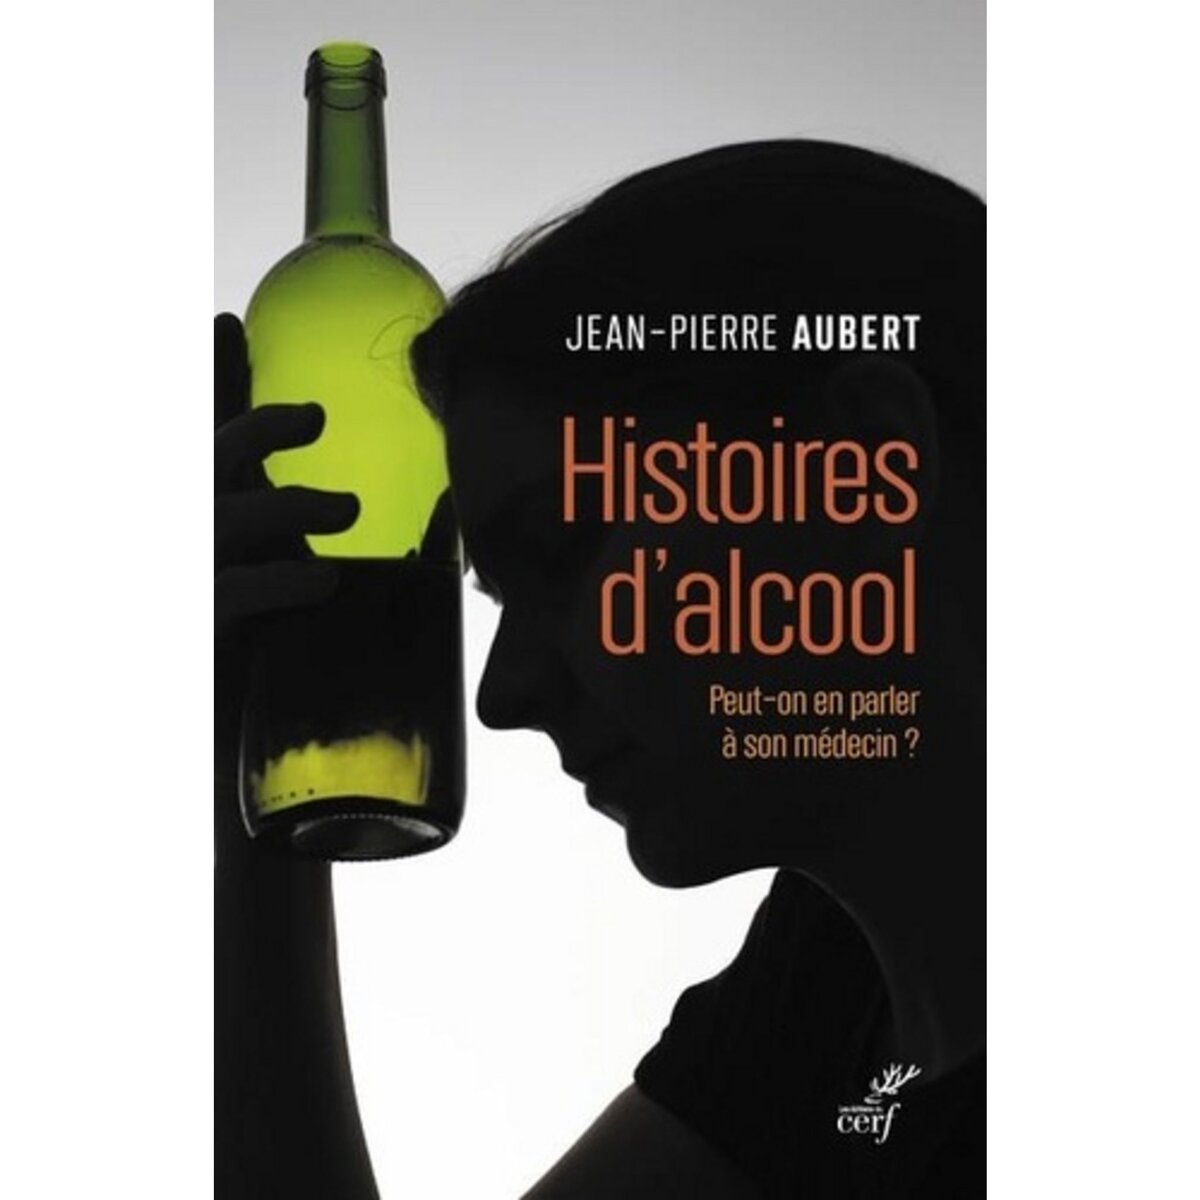  HISTOIRES D'ALCOOL. PEUT-ON EN PARLER A SON MEDECIN ?, Aubert Jean-Pierre